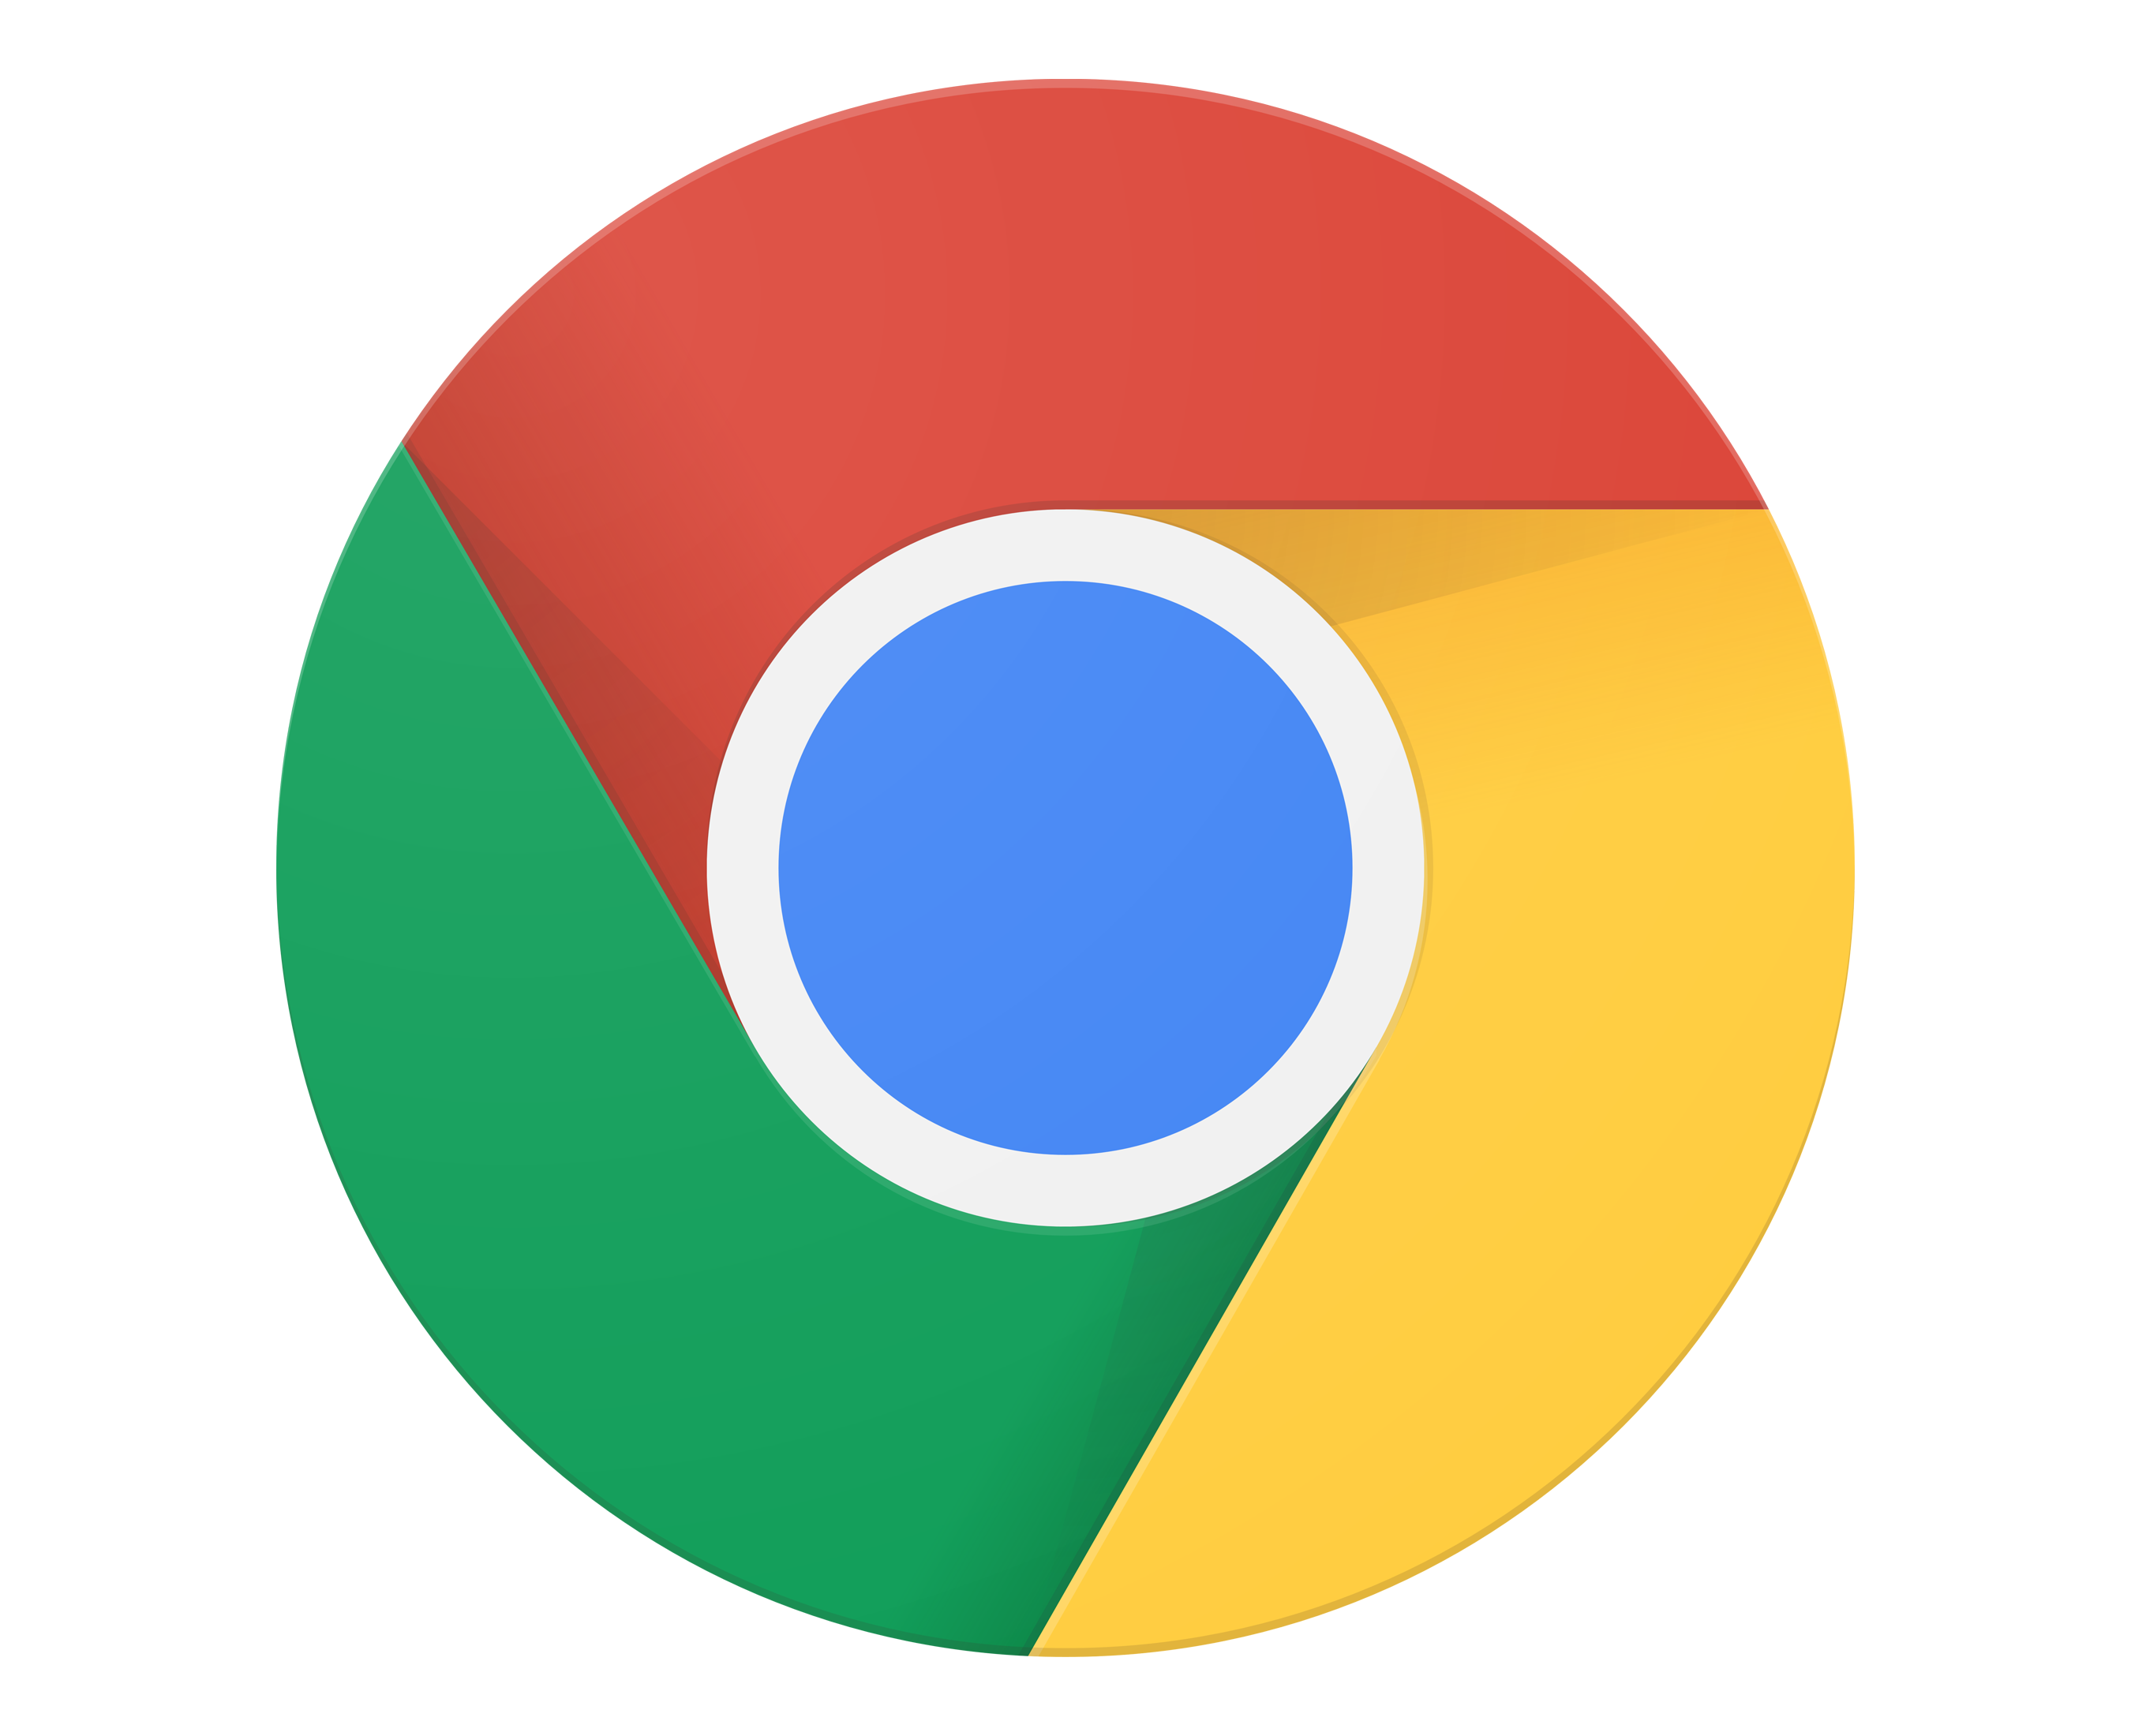 Chrome Logo PNG